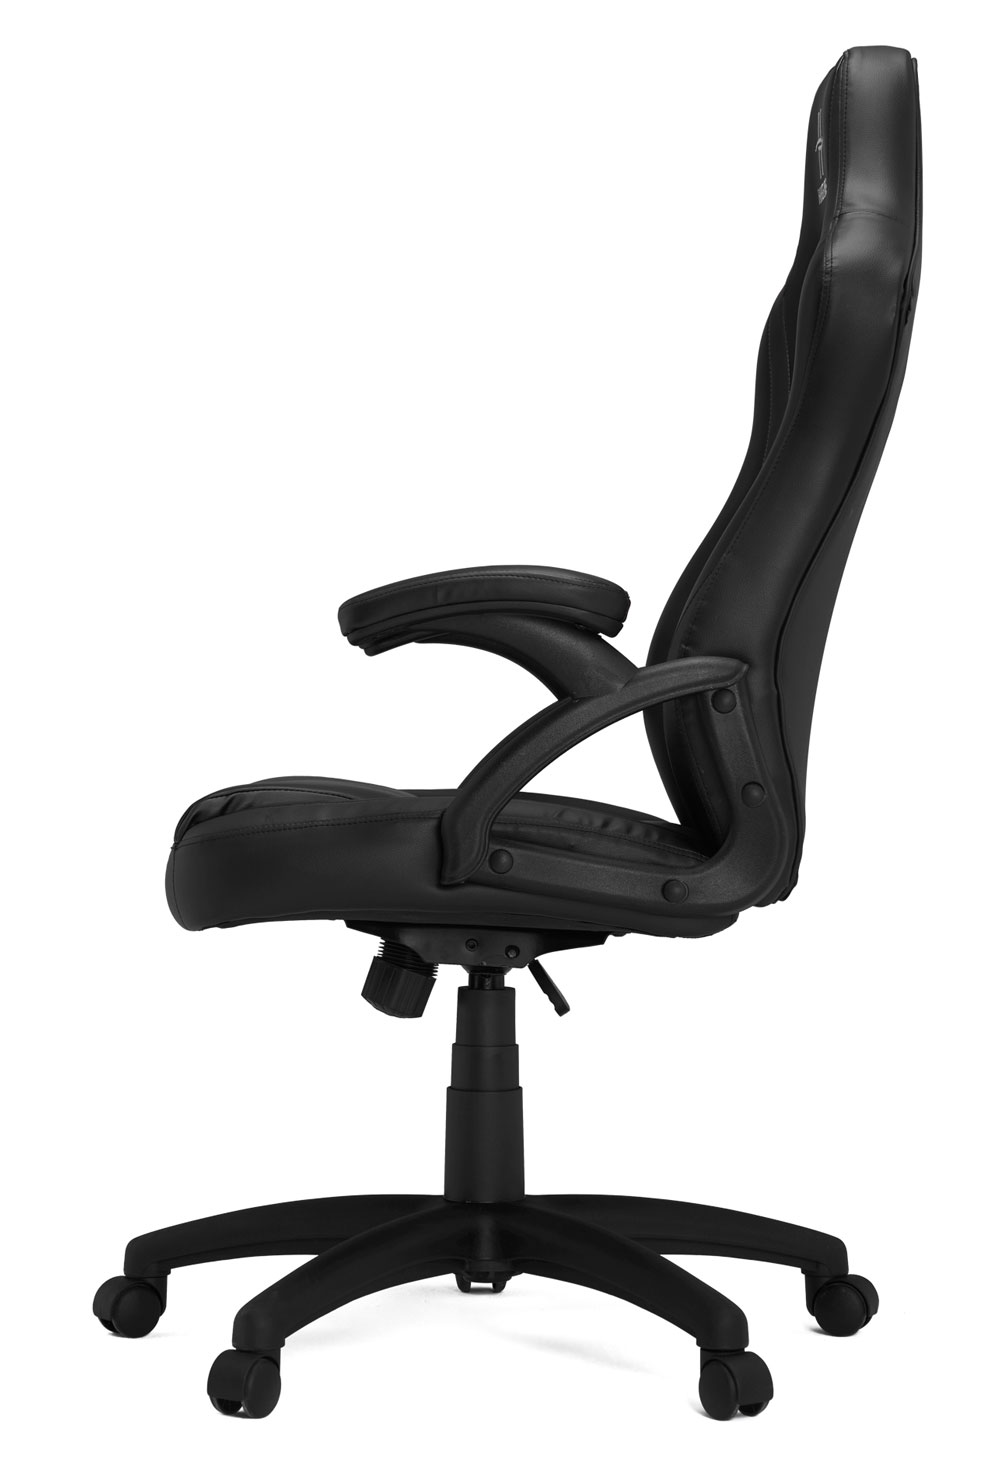 HHGears SM-115 Gaming Chair - Black